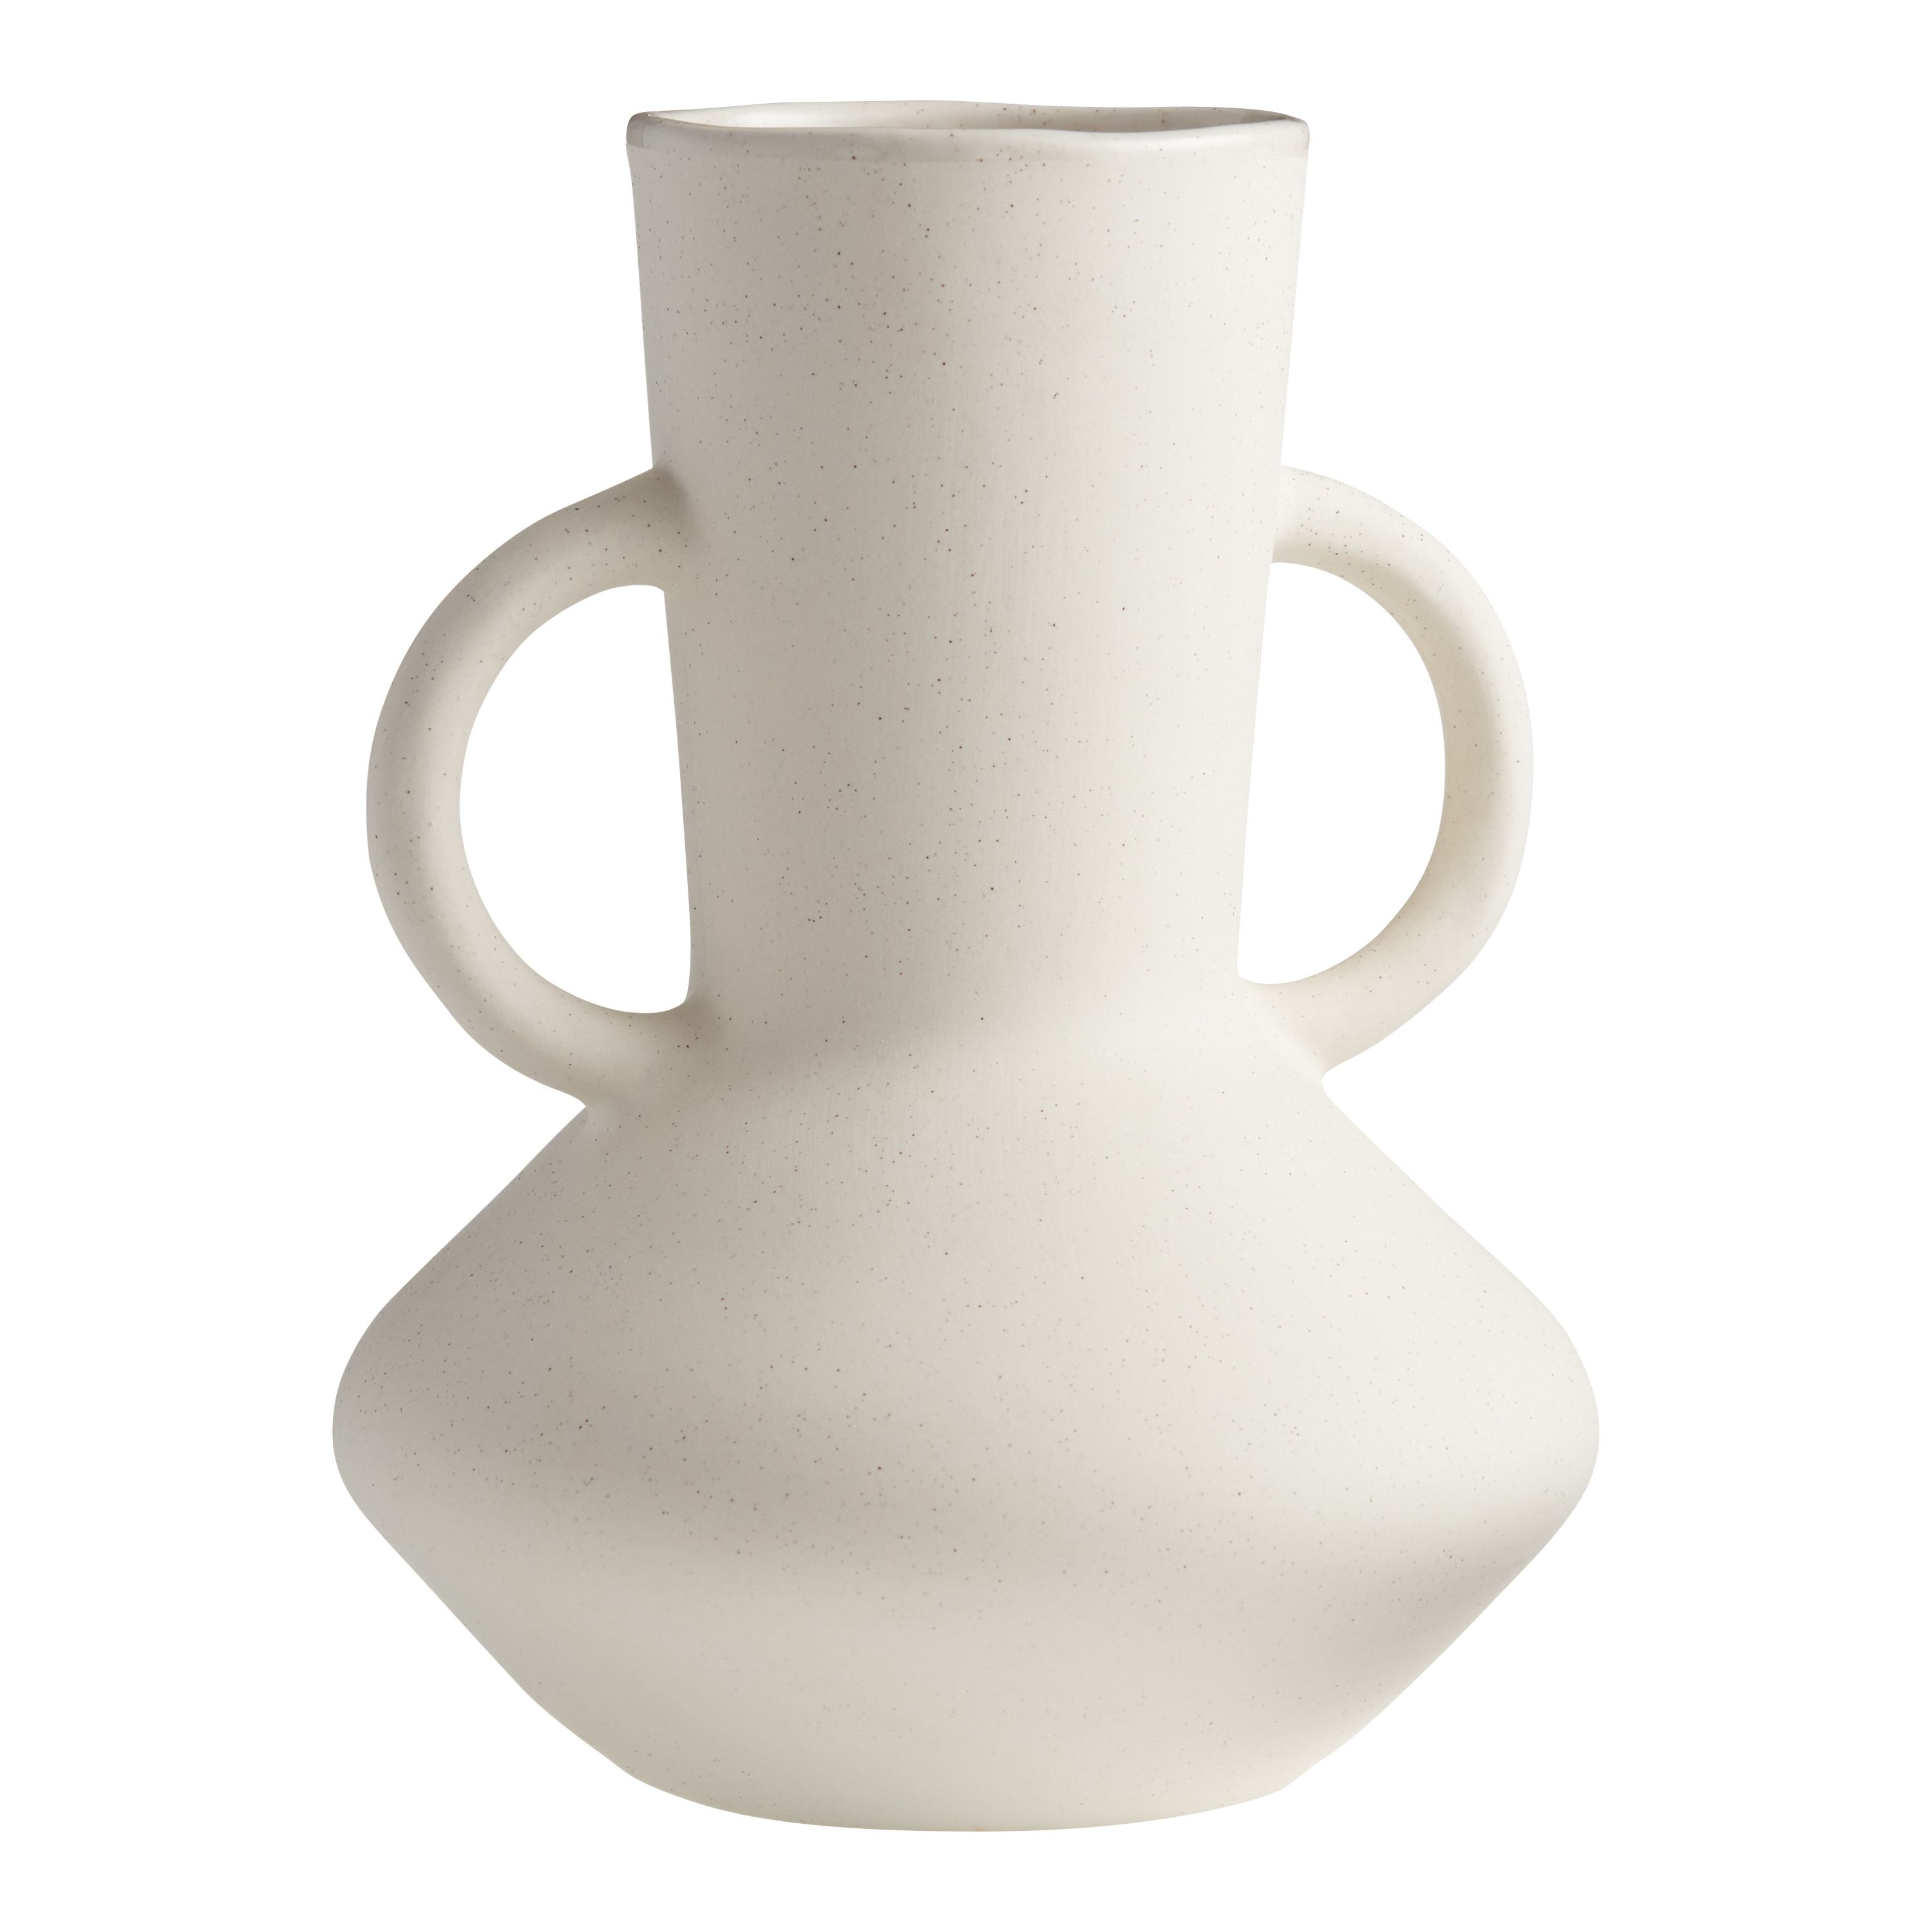 Ivory Textured Ceramic Vase With Handles | World Market